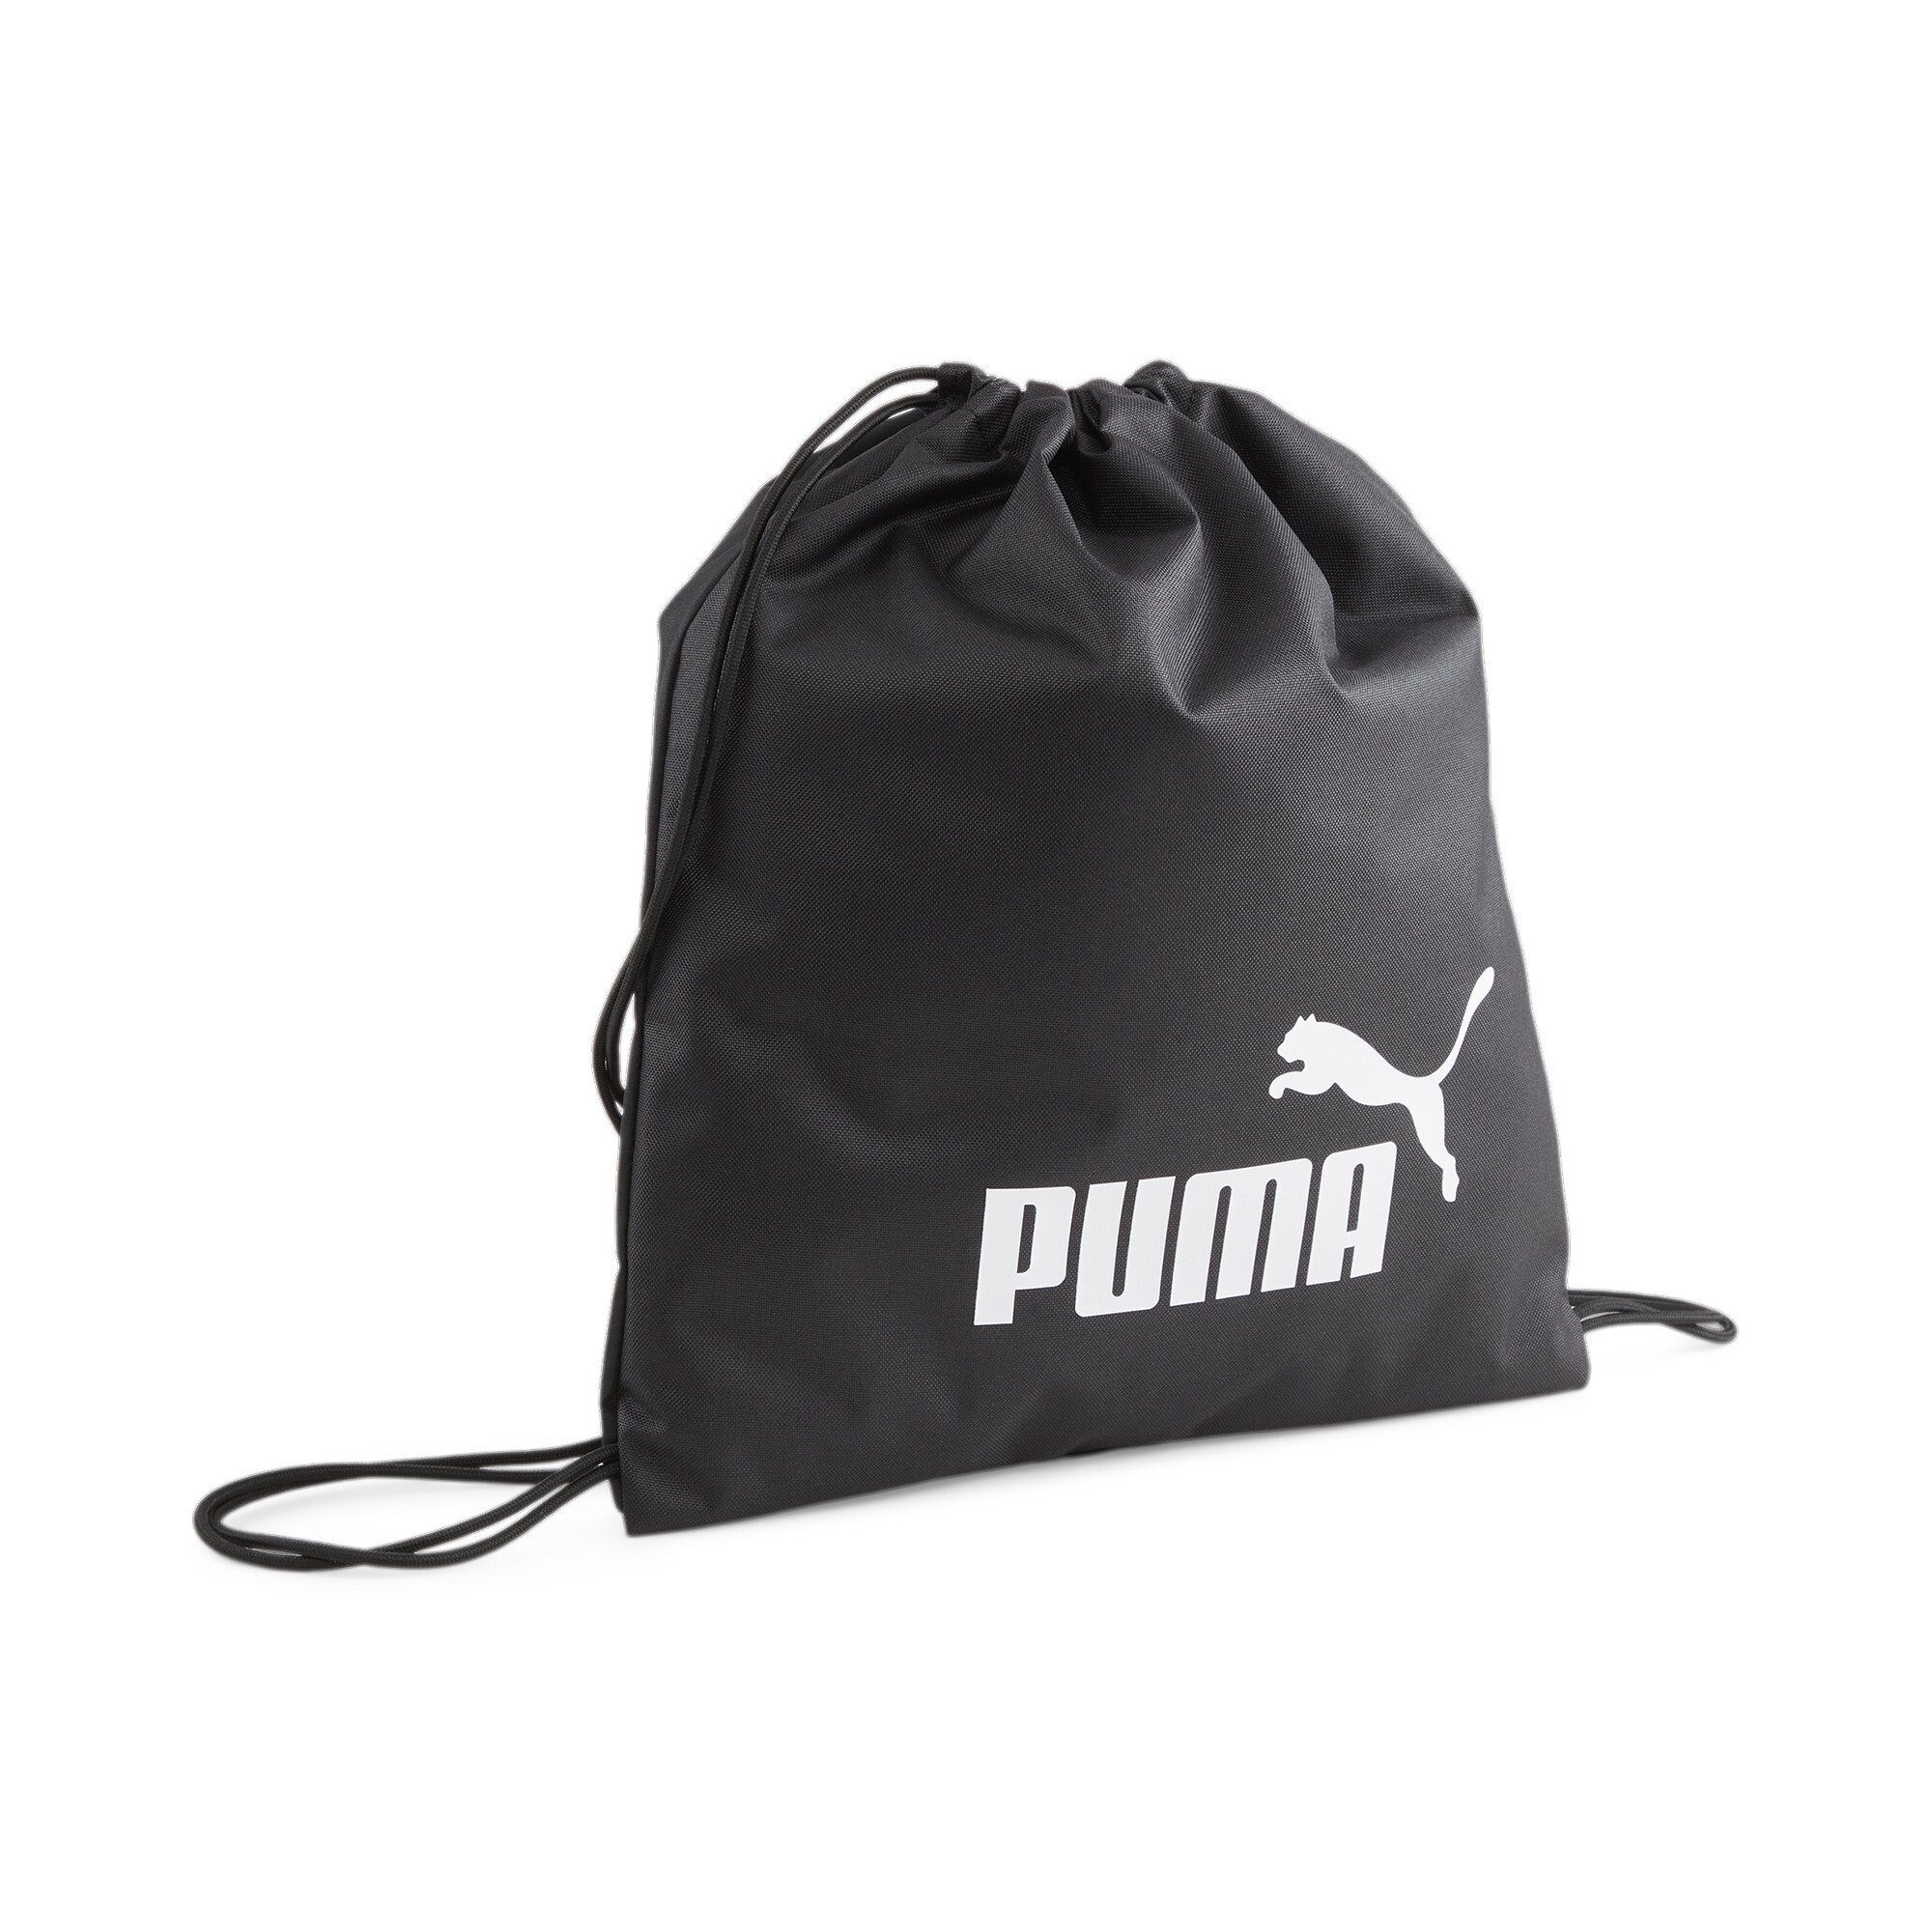 Puma sporttas 5L zwart wit Logo | Sporttas van